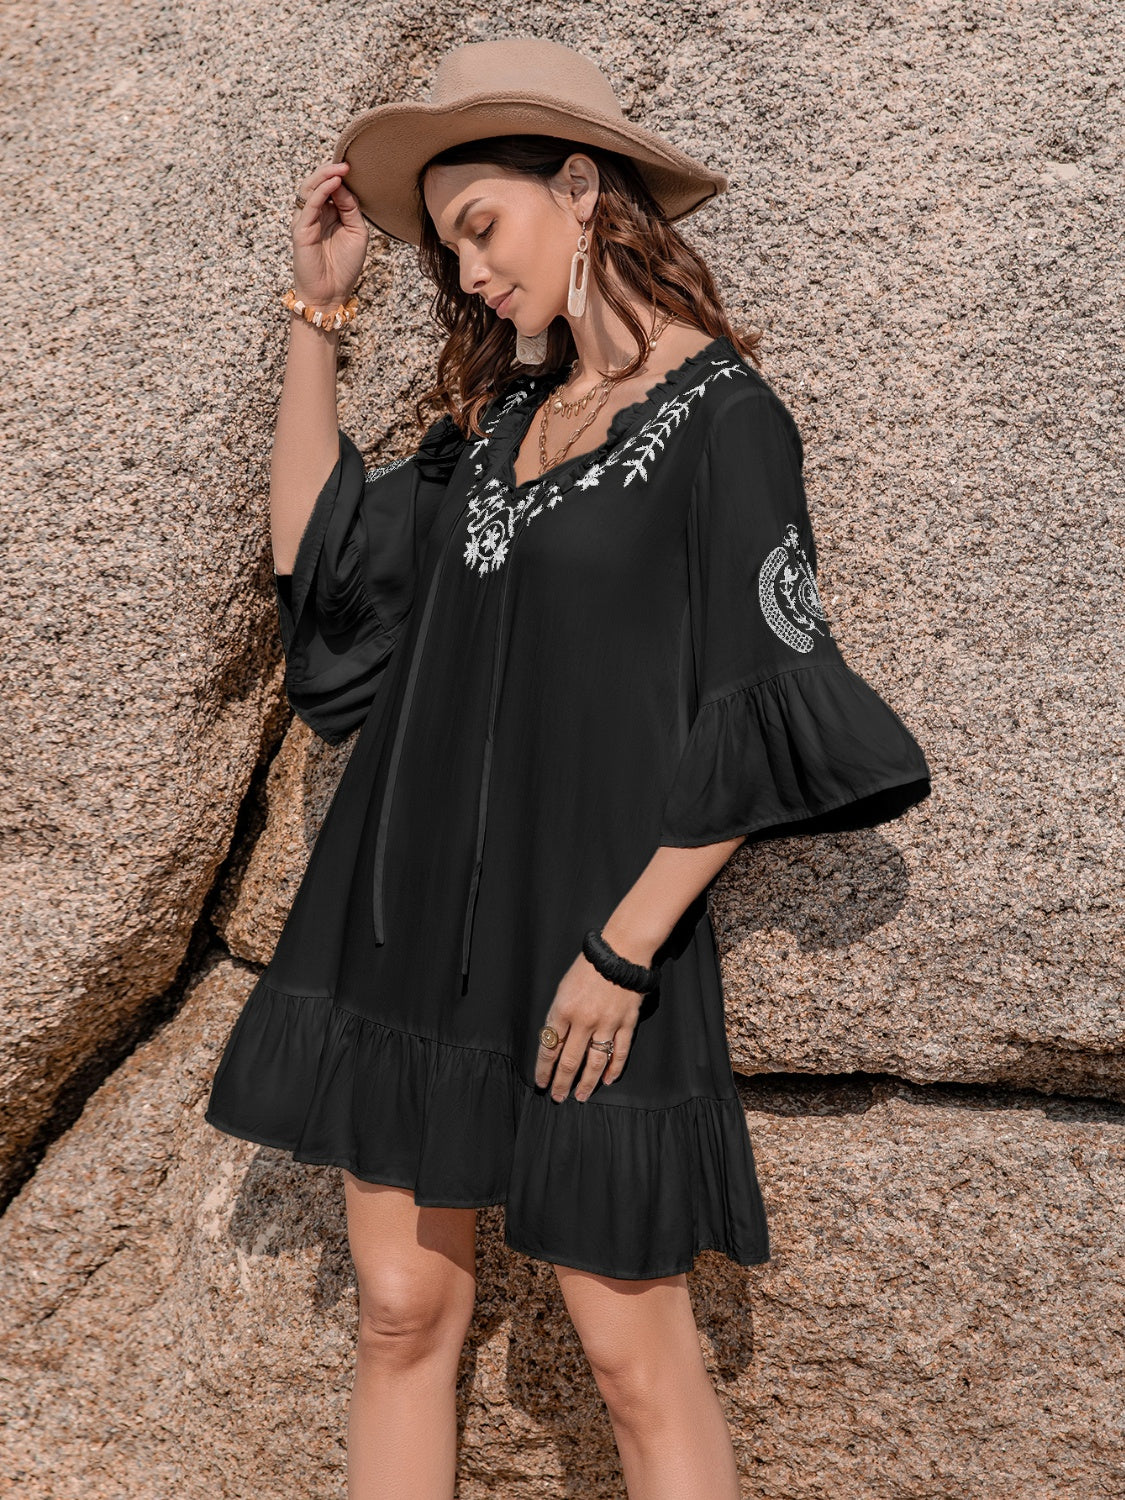 Flouncey Black Boho Beach Dress